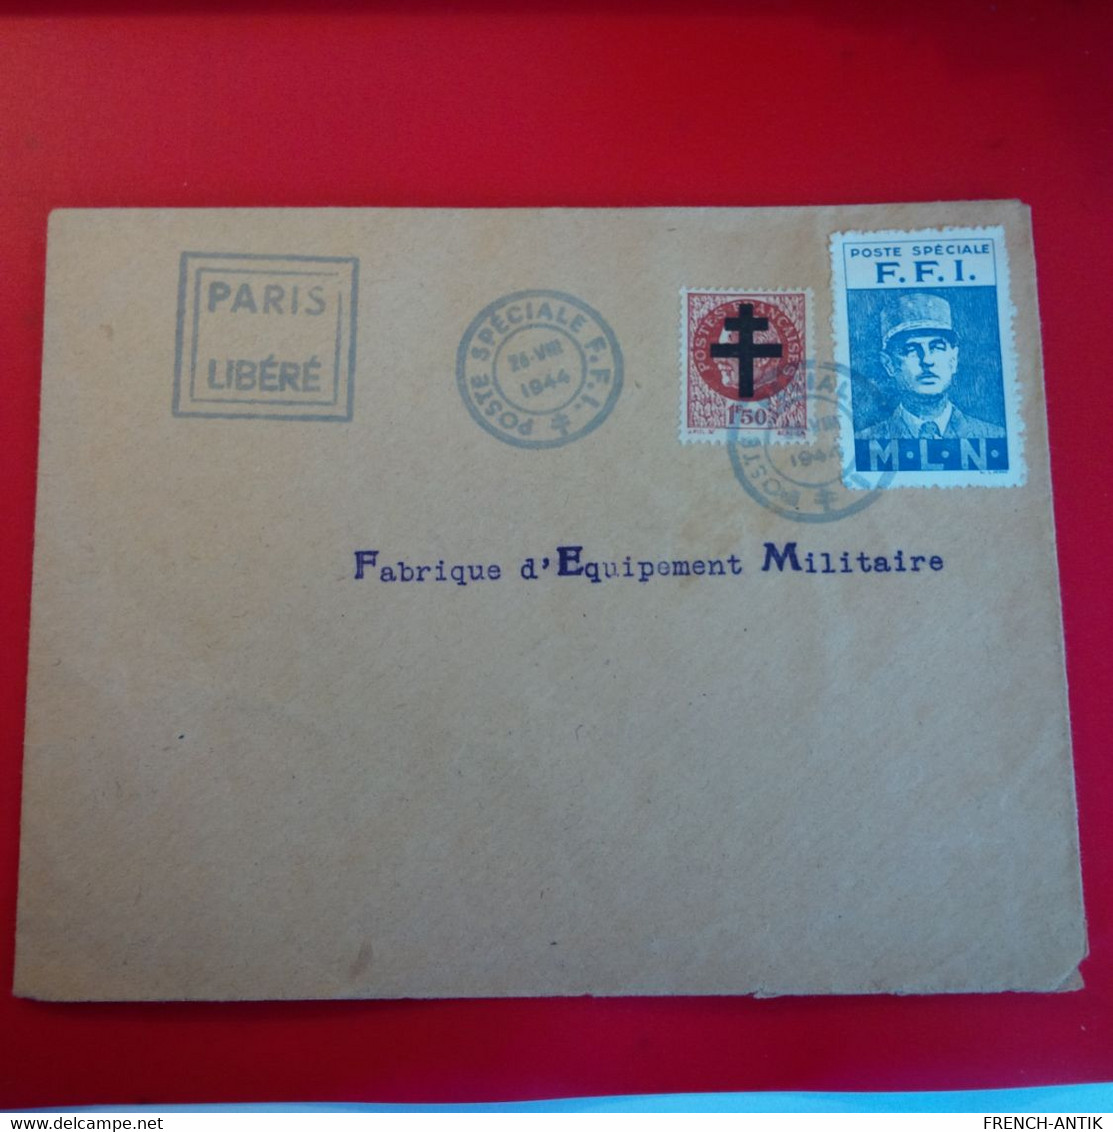 LETTRE PARIS LIBERE F.F.I POSTE SPECIALE 1944 - Covers & Documents